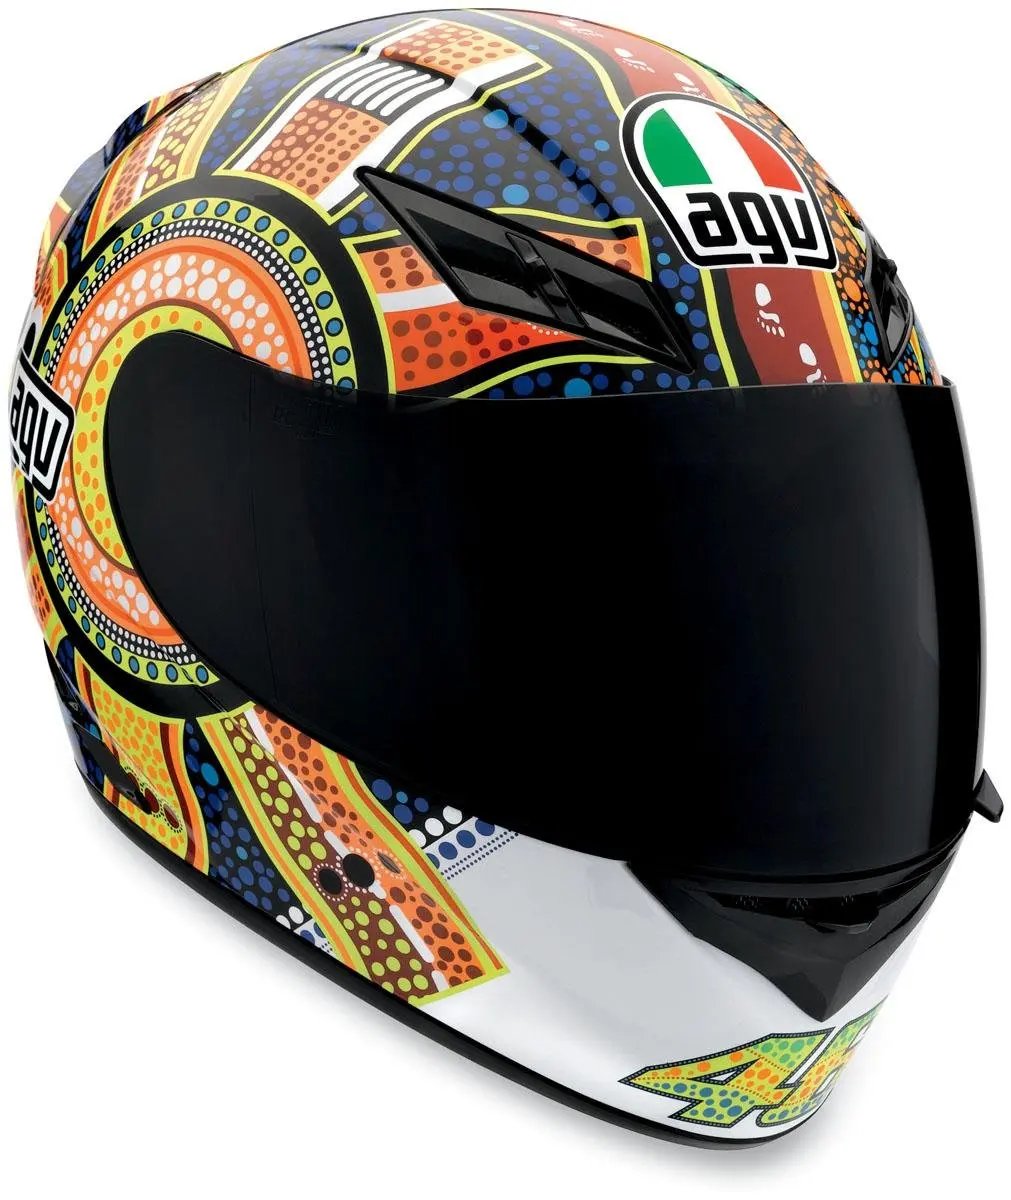 Cheap Rossi Agv Helmet, find Rossi Agv Helmet deals on line at Alibaba.com